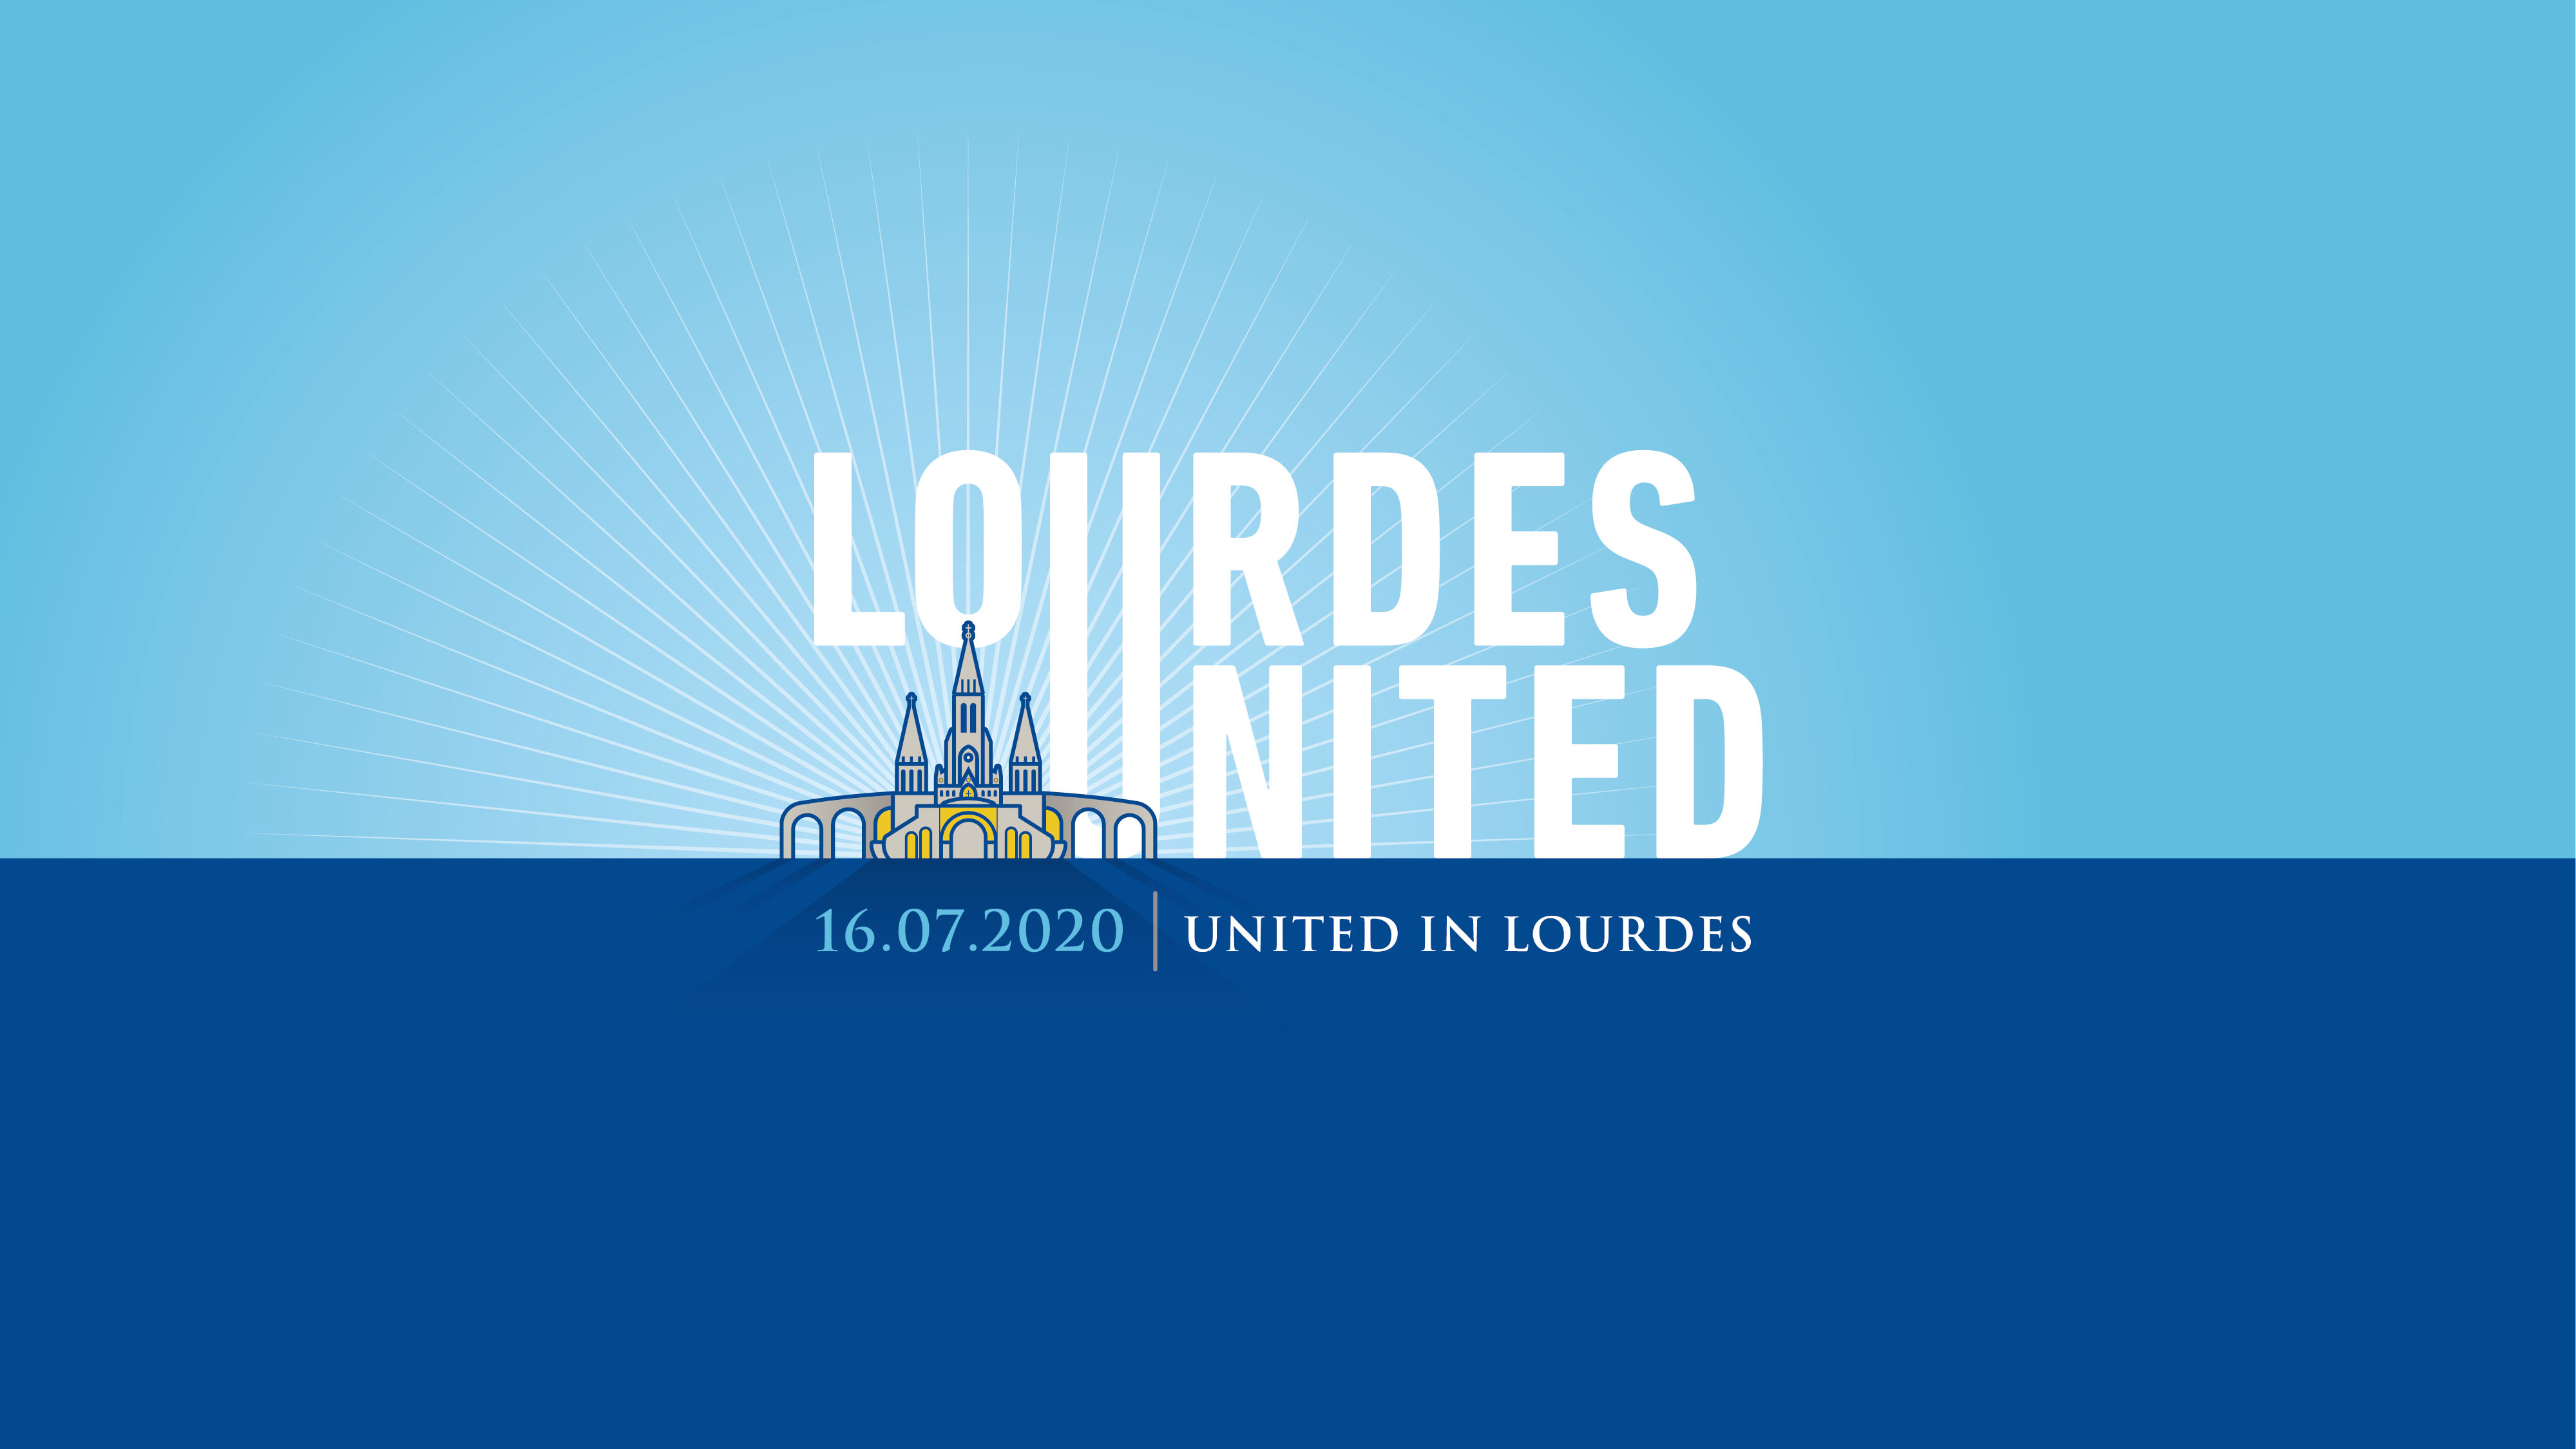 The International Sanctuary of Lourdes launches “Lourdes United” global e-pilgrimage